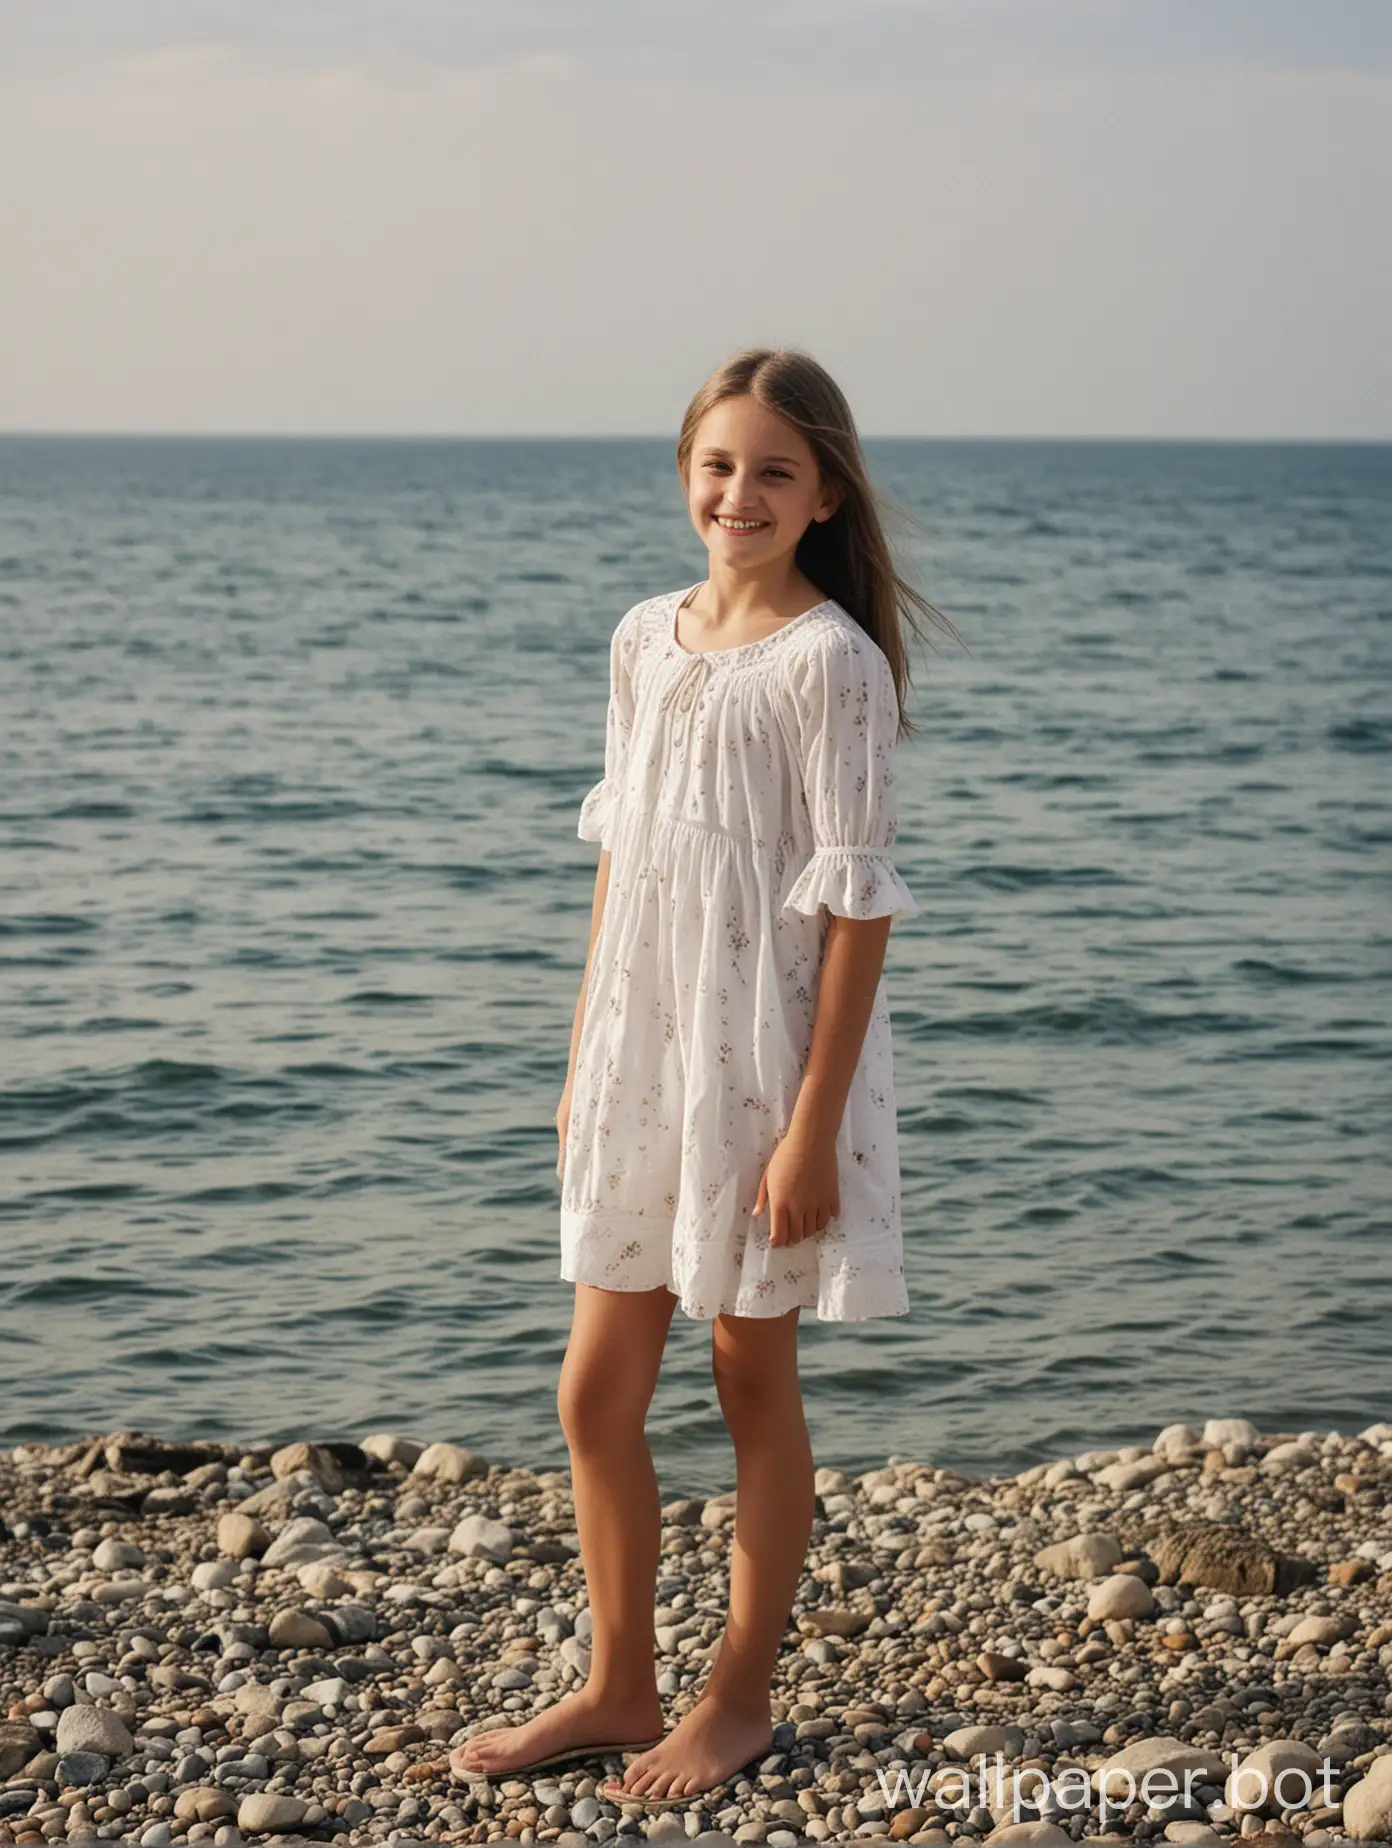 Crimea, view of the sea, 11-year-old girl, full height, smile, light short dress